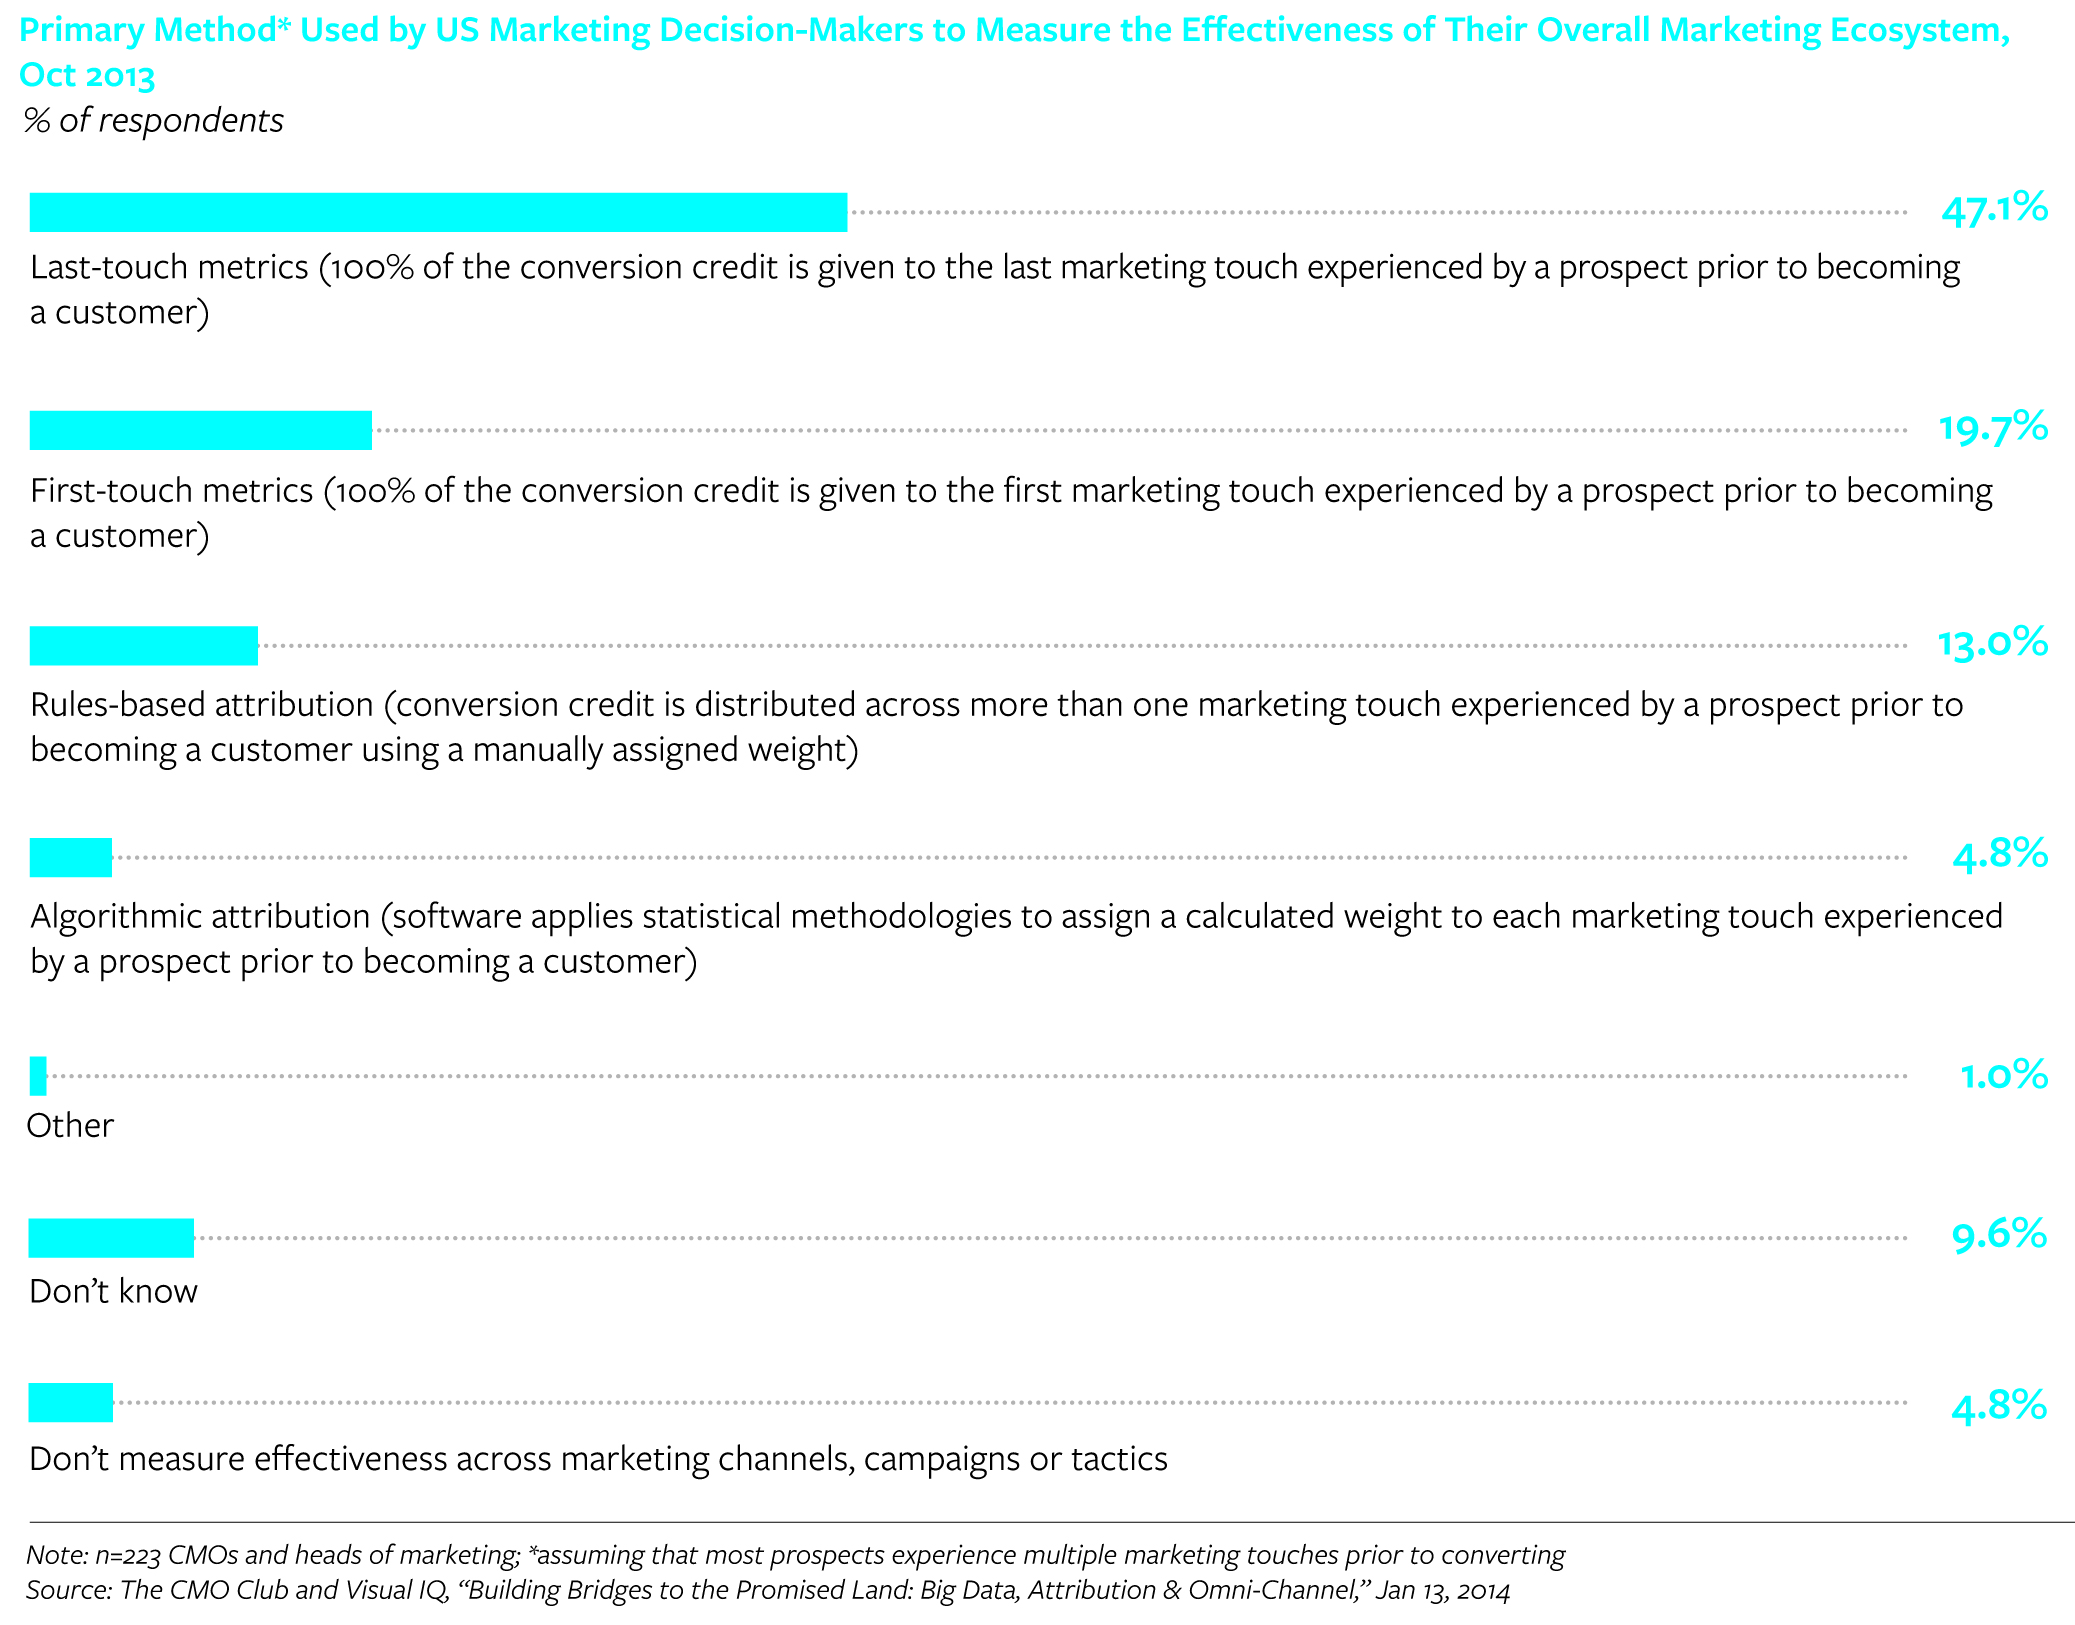 Primary method used to measure marketing effectiveness